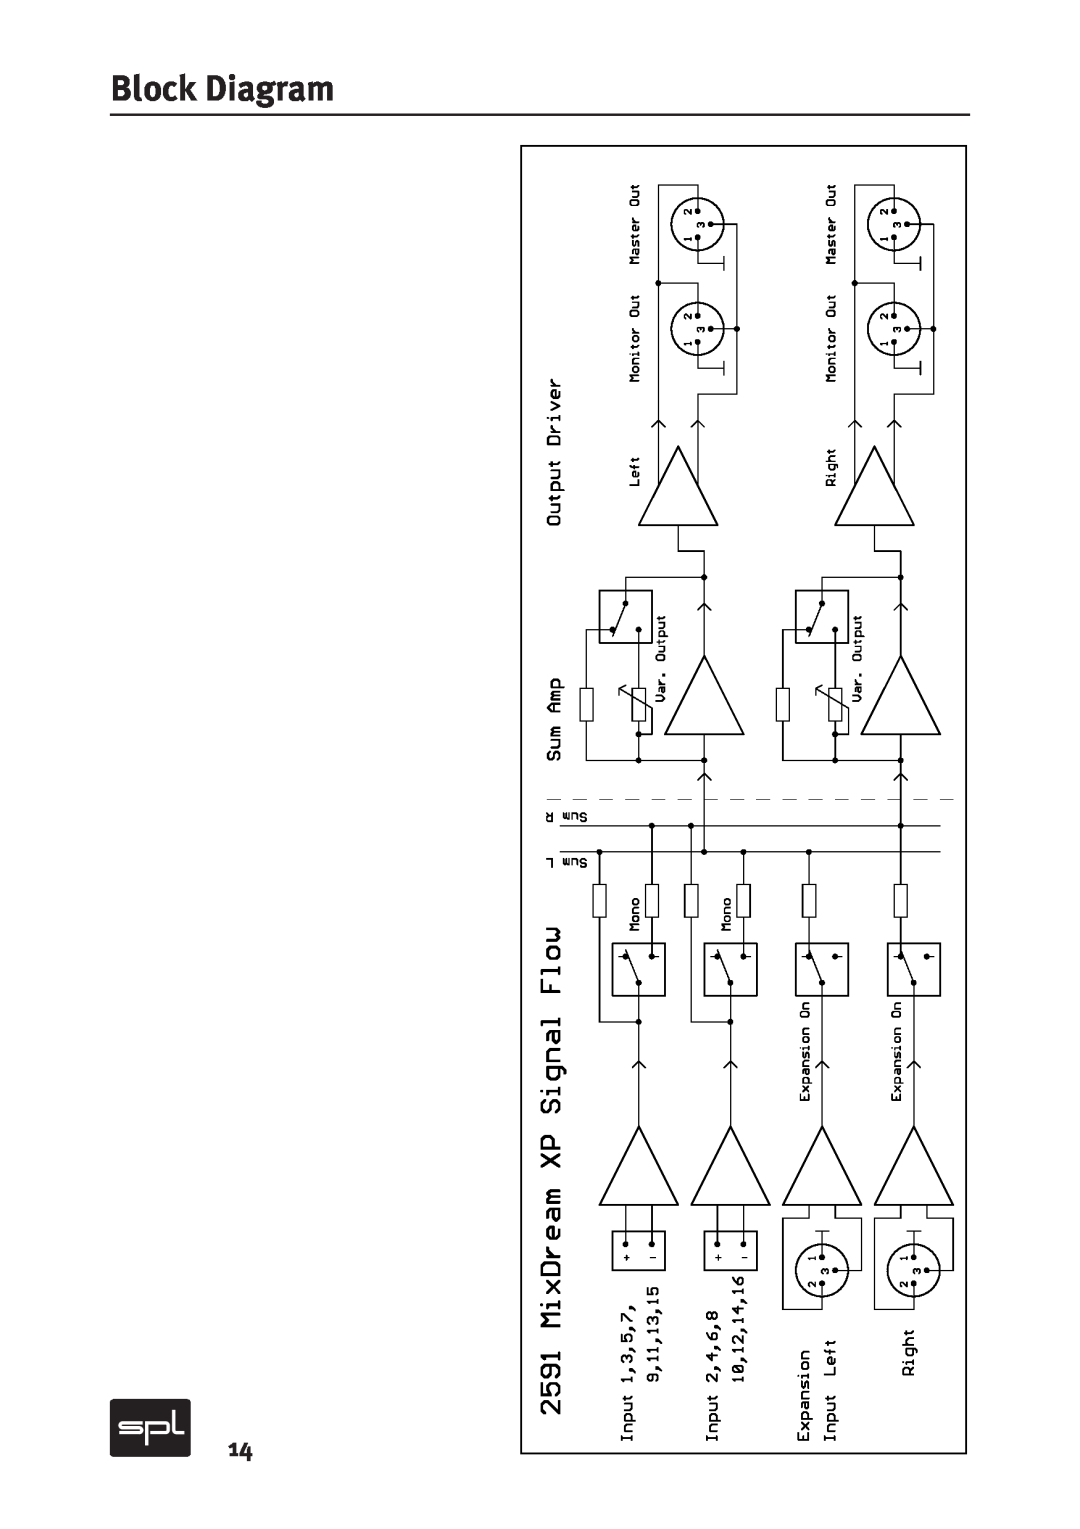 Sound Performance Lab Model 2591 manual Block Diagram 